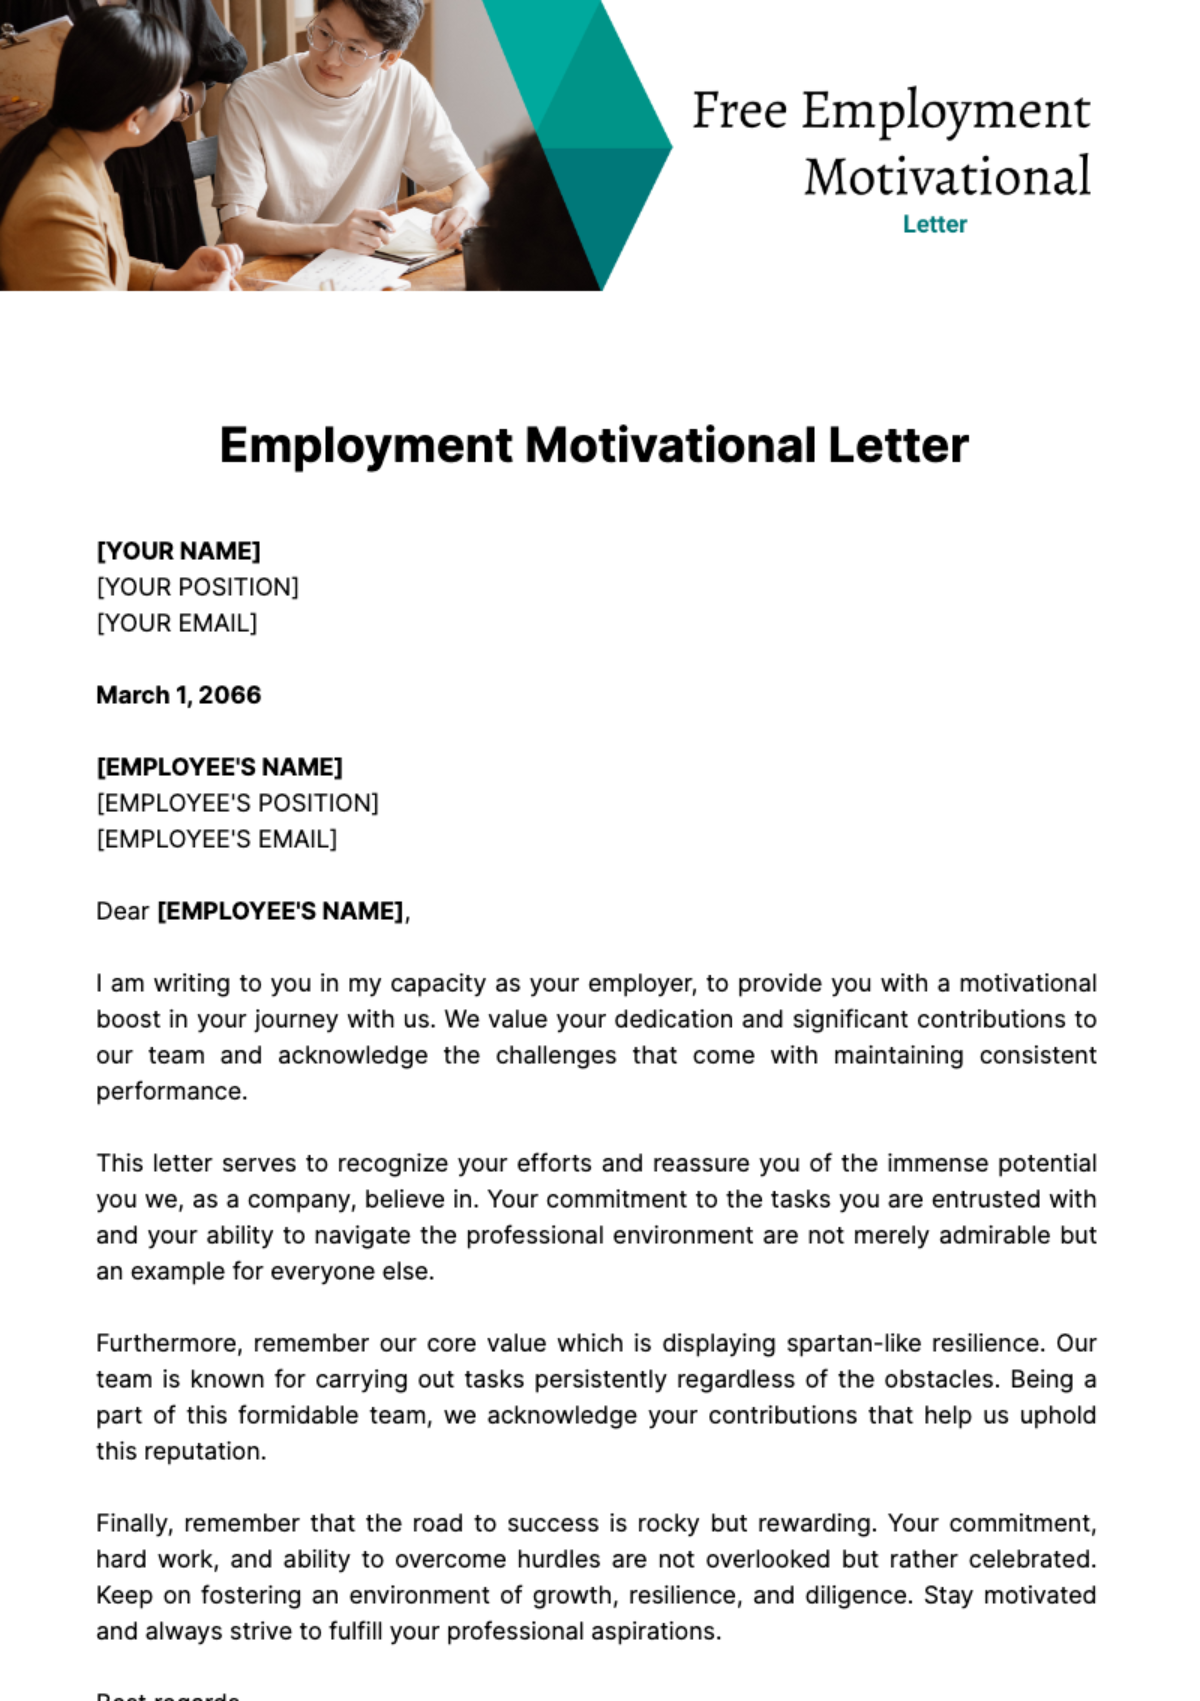 Free Employment Motivational Letter Template